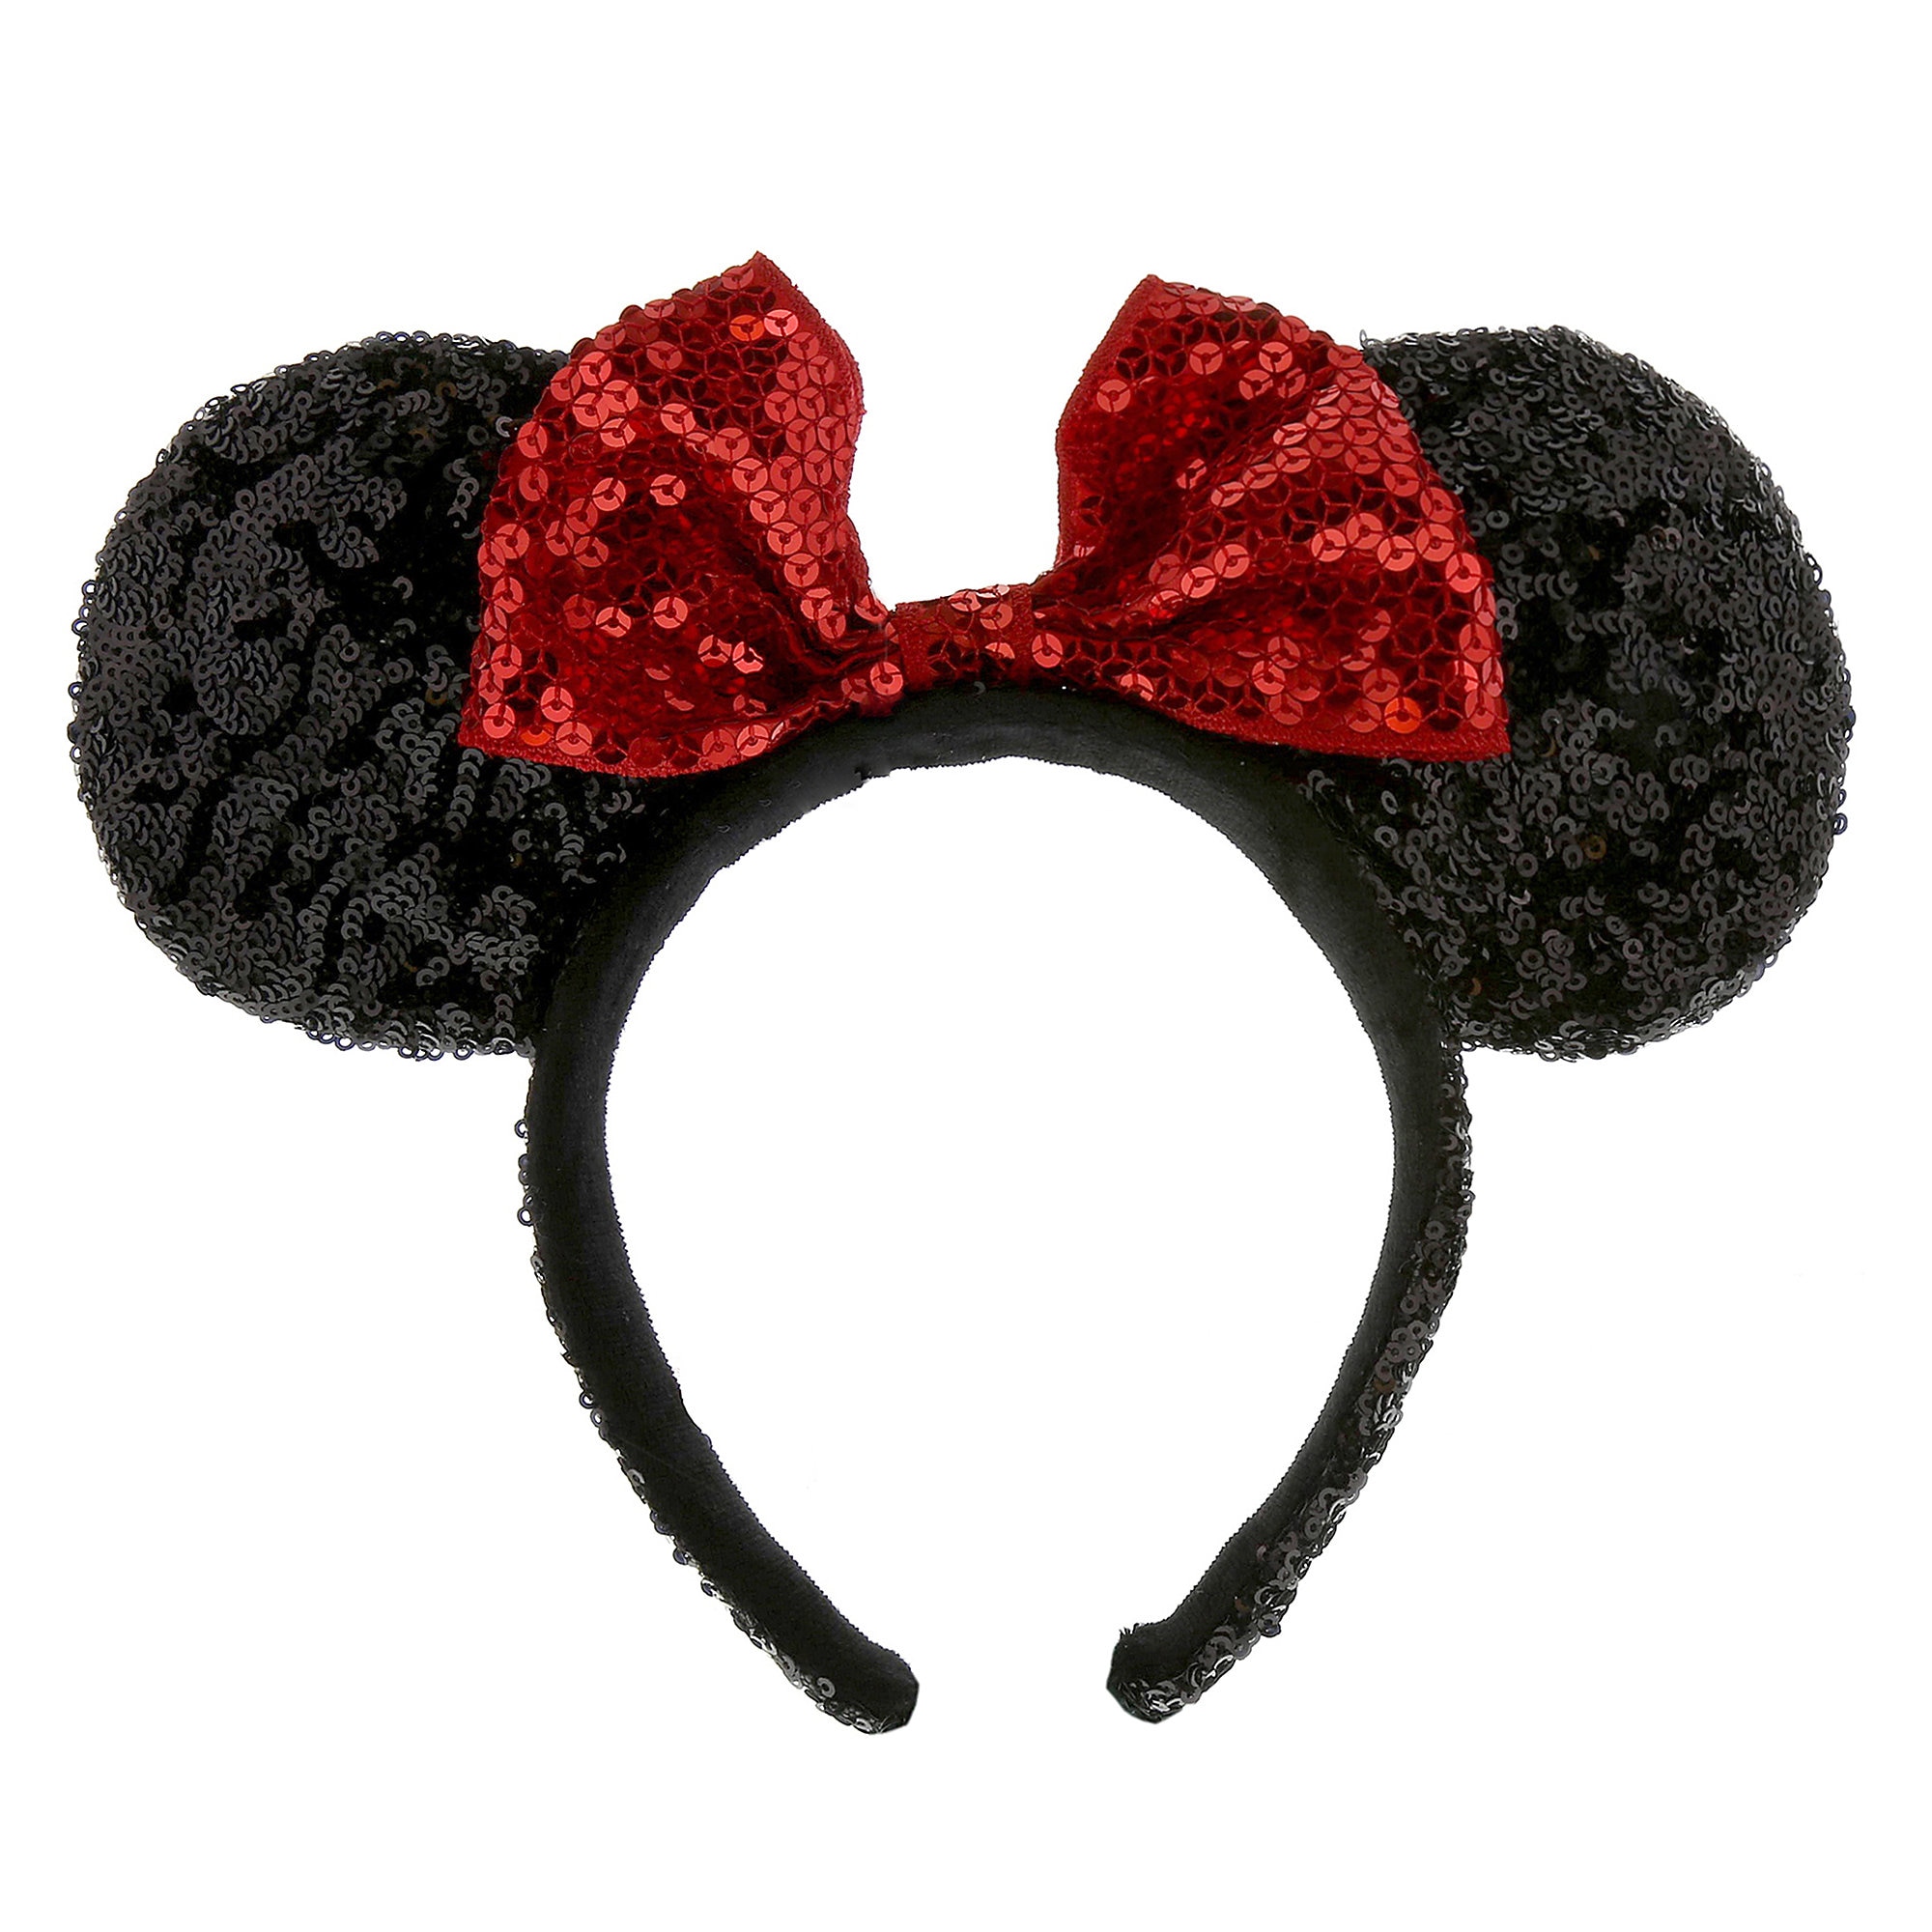 Minnie Mouse Ears Headband – Sequined image